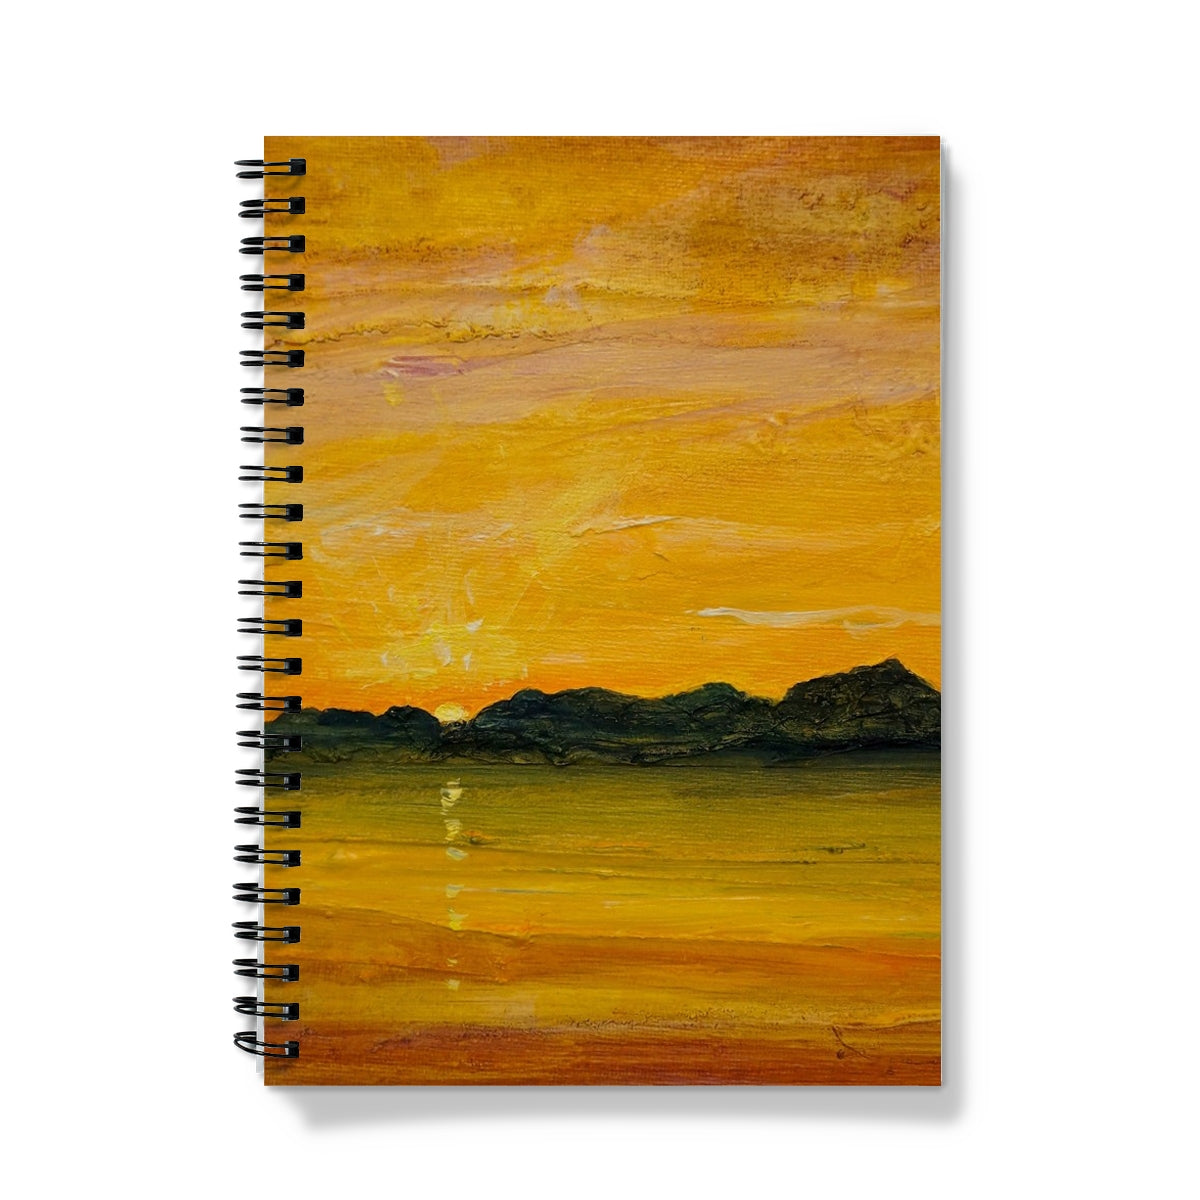 Jura Sunset Art Gifts Notebook-Journals & Notebooks-Hebridean Islands Art Gallery-A4-Graph-Paintings, Prints, Homeware, Art Gifts From Scotland By Scottish Artist Kevin Hunter